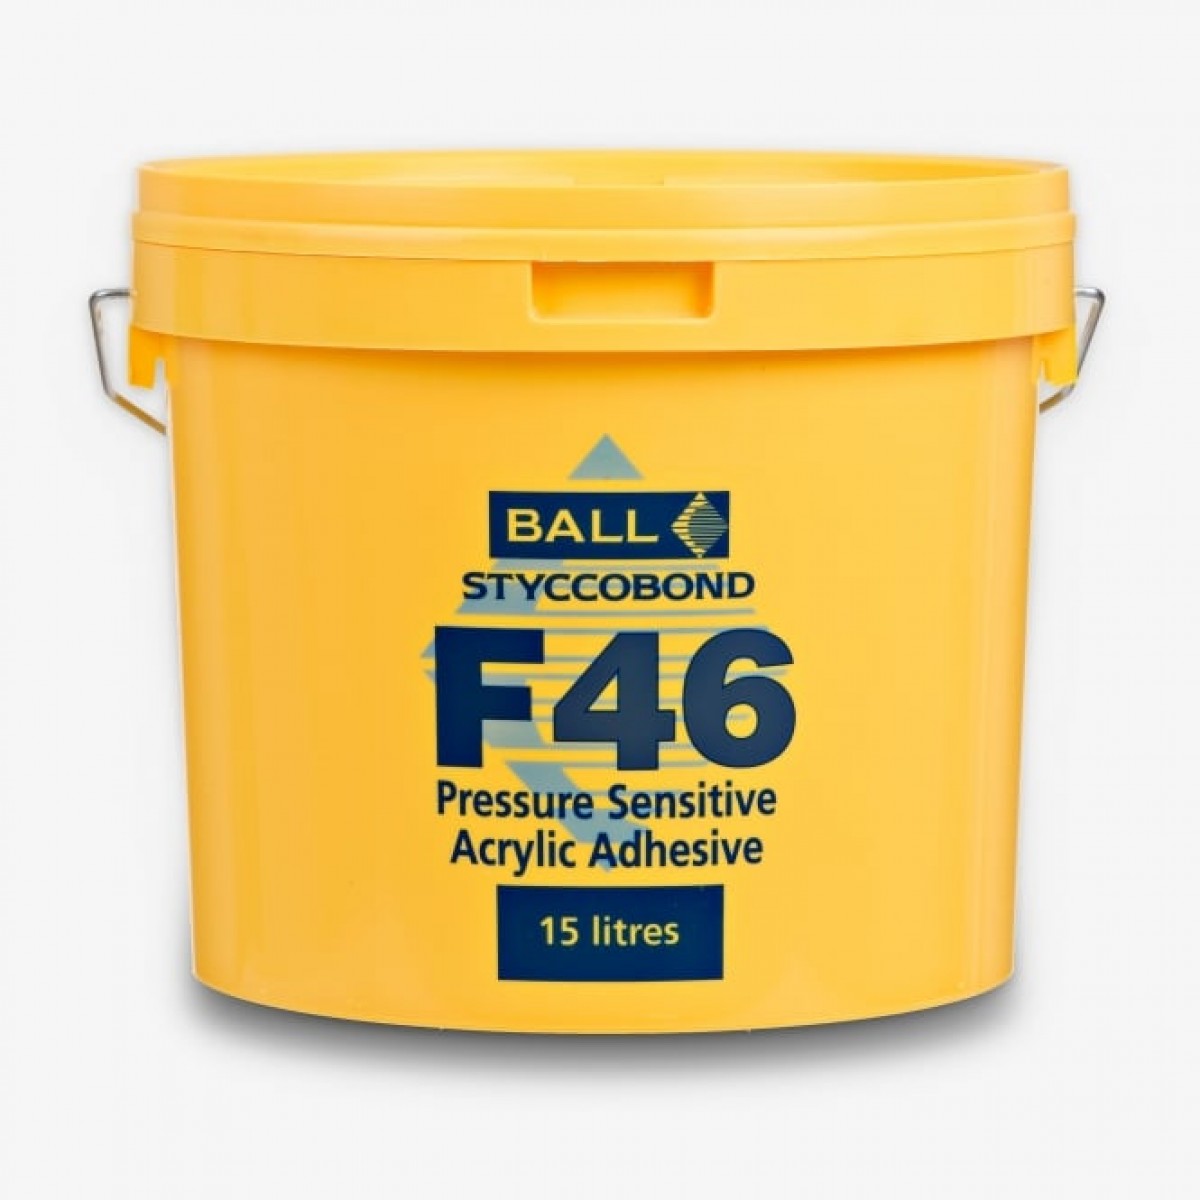 F46 LVT 15ltr Adhesive Safety Flooring